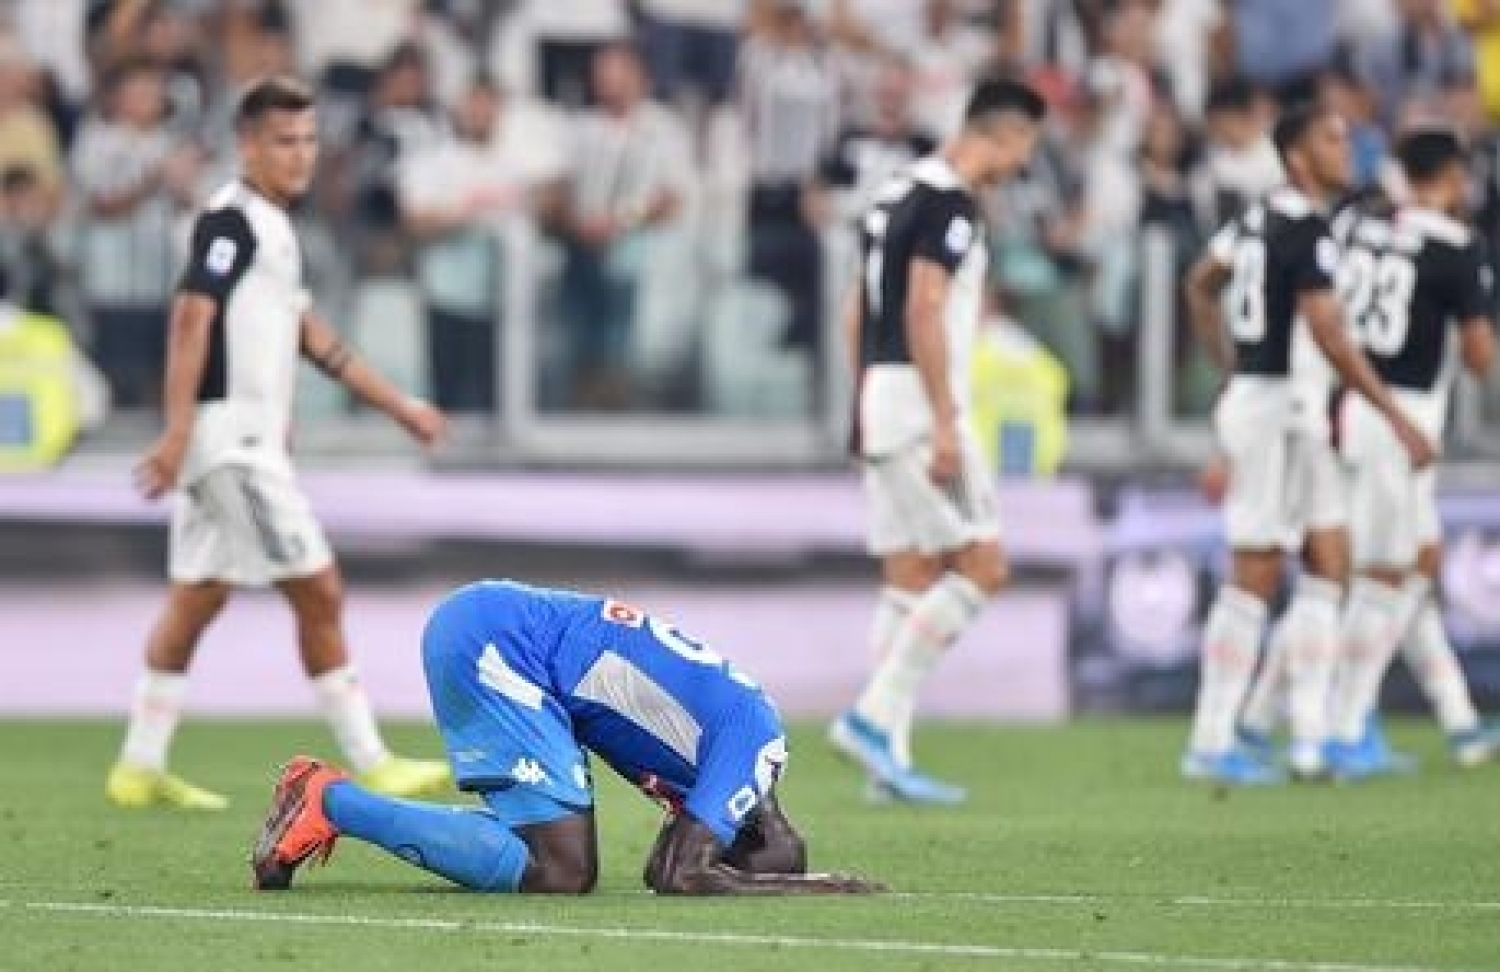 Koulibaly nel bene e nel male.Juventus-Napoli 4-3